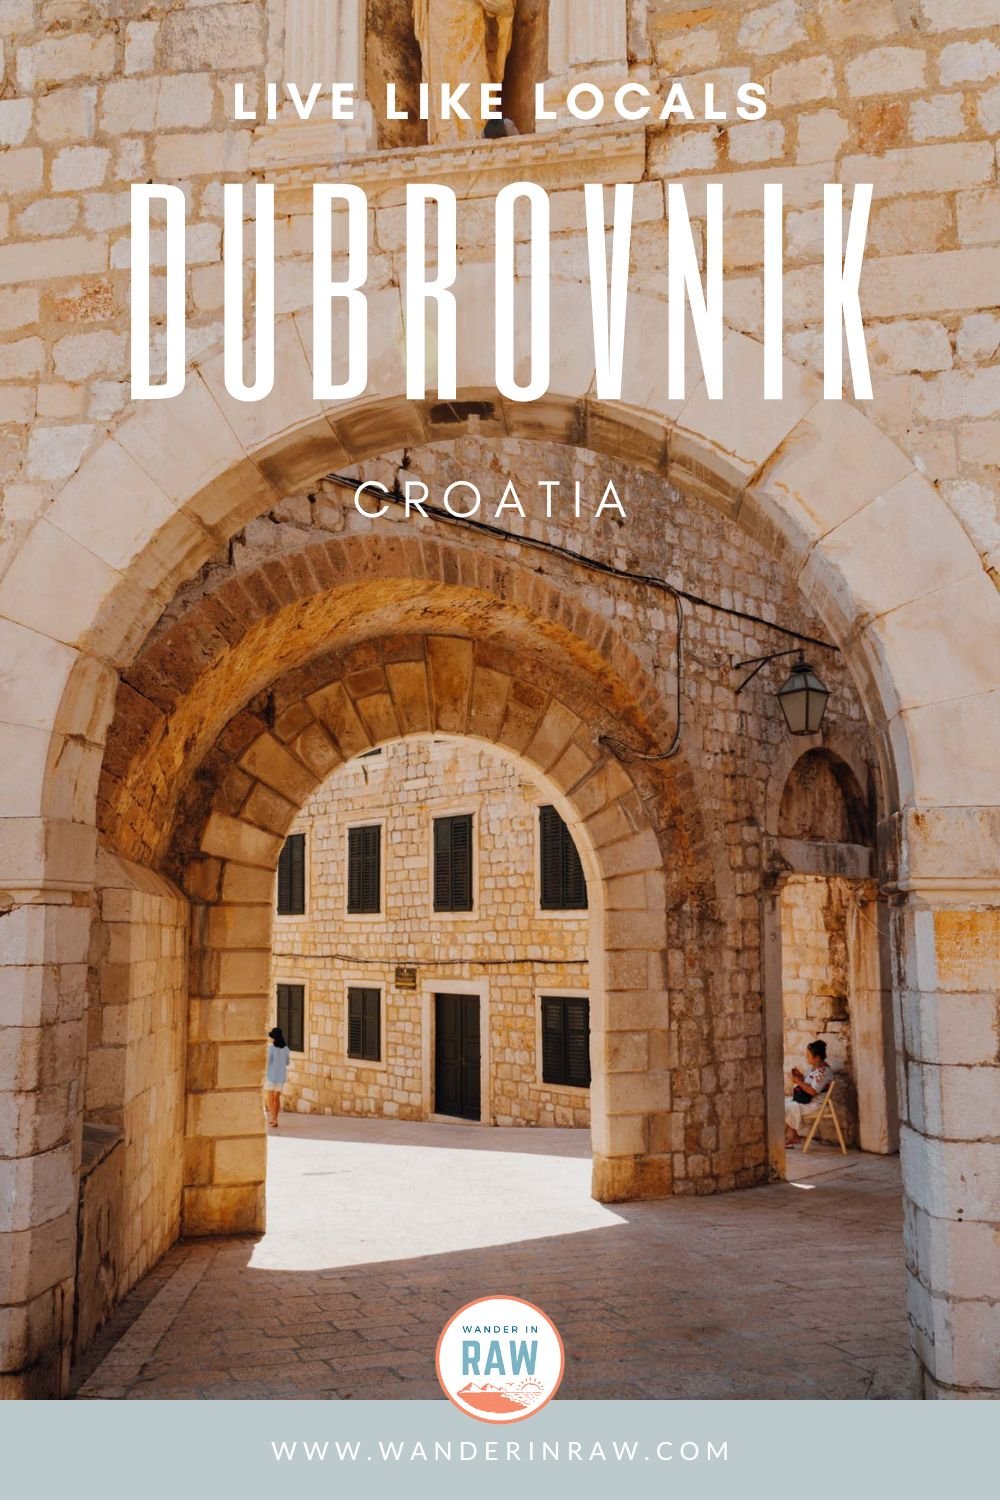 Live Like Locals in Dubrovnik Port